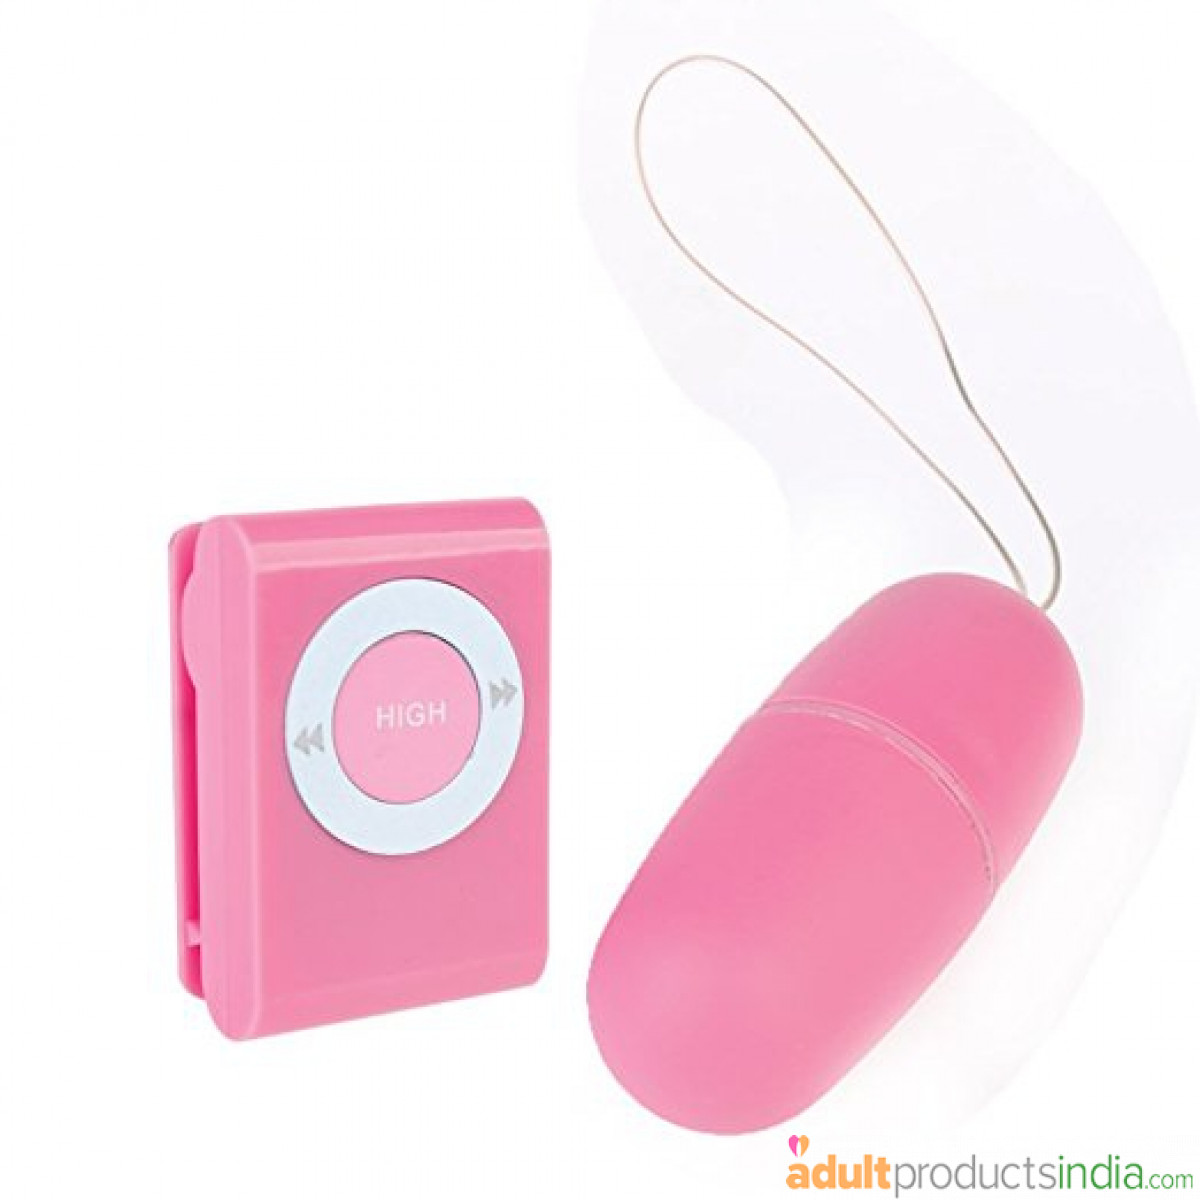 Remote Control Vibrating Egg - pink